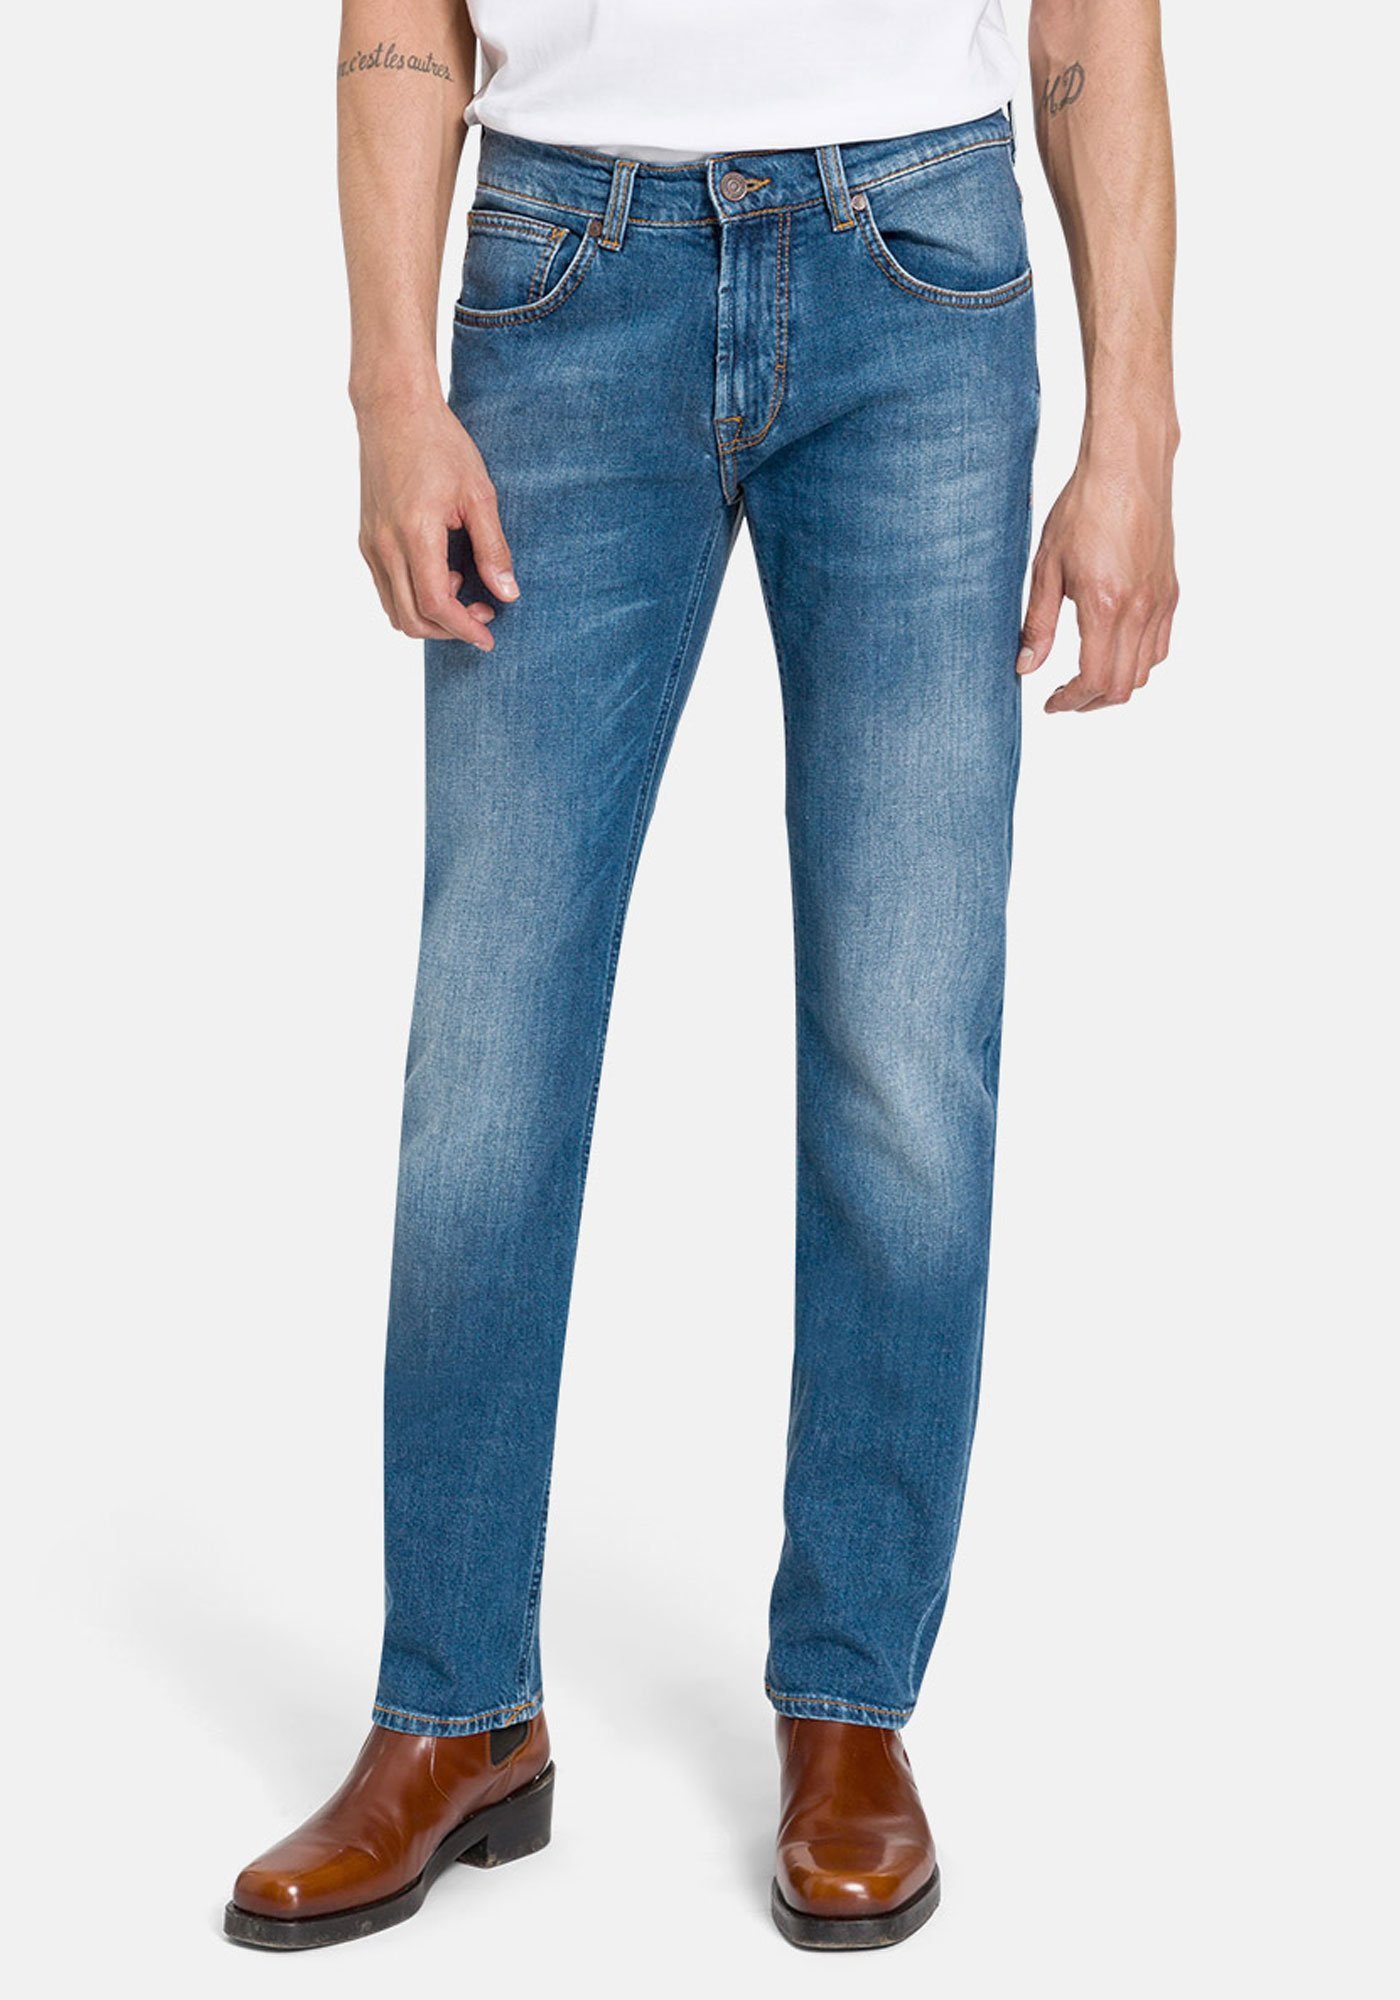 BALDESSARINI 5-Pocket-Jeans John Tribute To Nature Candiani Denim blue fashion | Straight-Fit Jeans